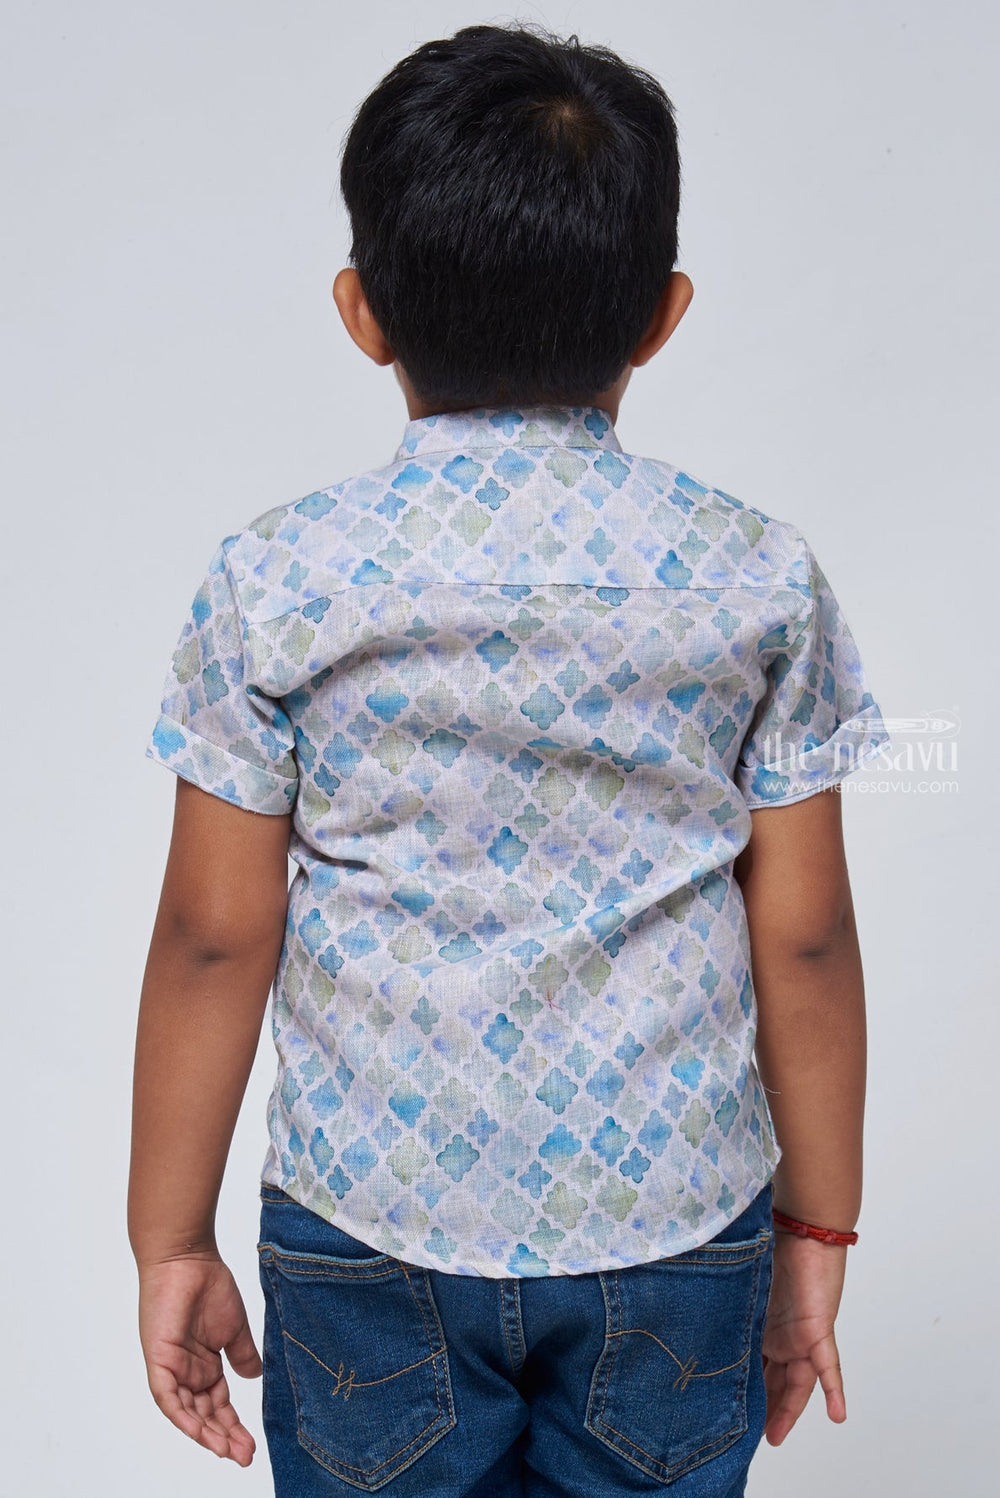 The Nesavu Boys Linen Shirt Linen Boys' Shirt with Geometric Prints for a Modern and Artistic Twist Nesavu Geometric Printed Linen Shirt | Baby Boys Casual Shirt | The Nesavu